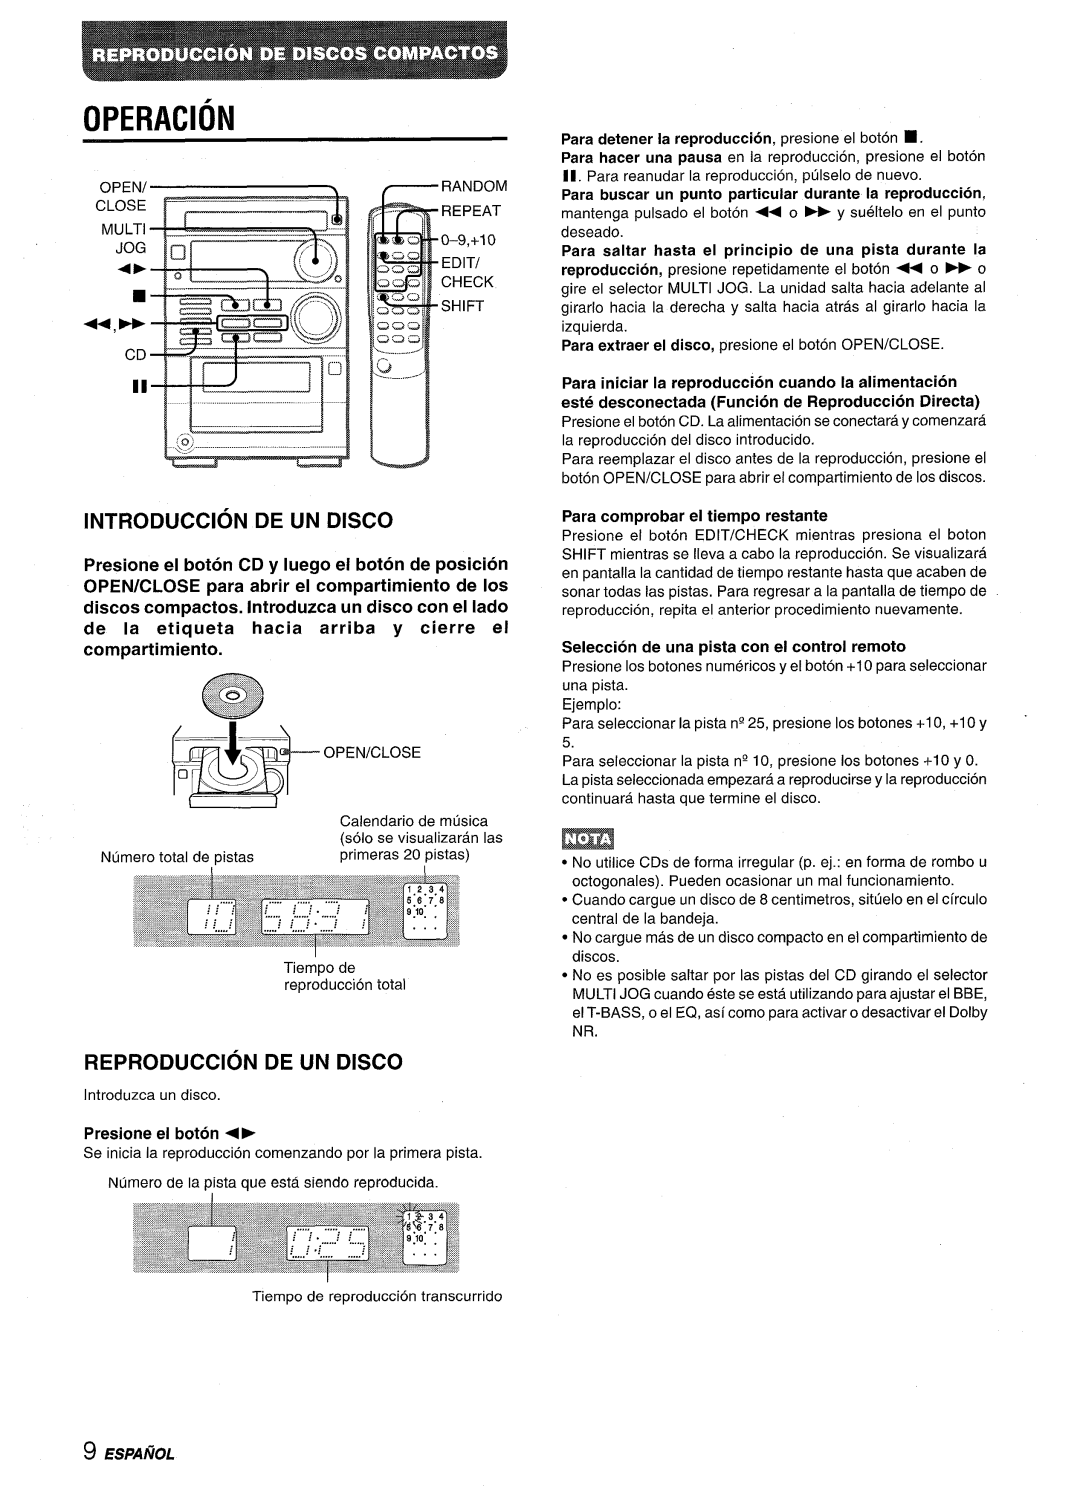 Aiwa XR-M35 manual Operacion, Introduction De Un Disco, Reproduction De Un Disco, Presione el boton + P, ESPAfiOL 